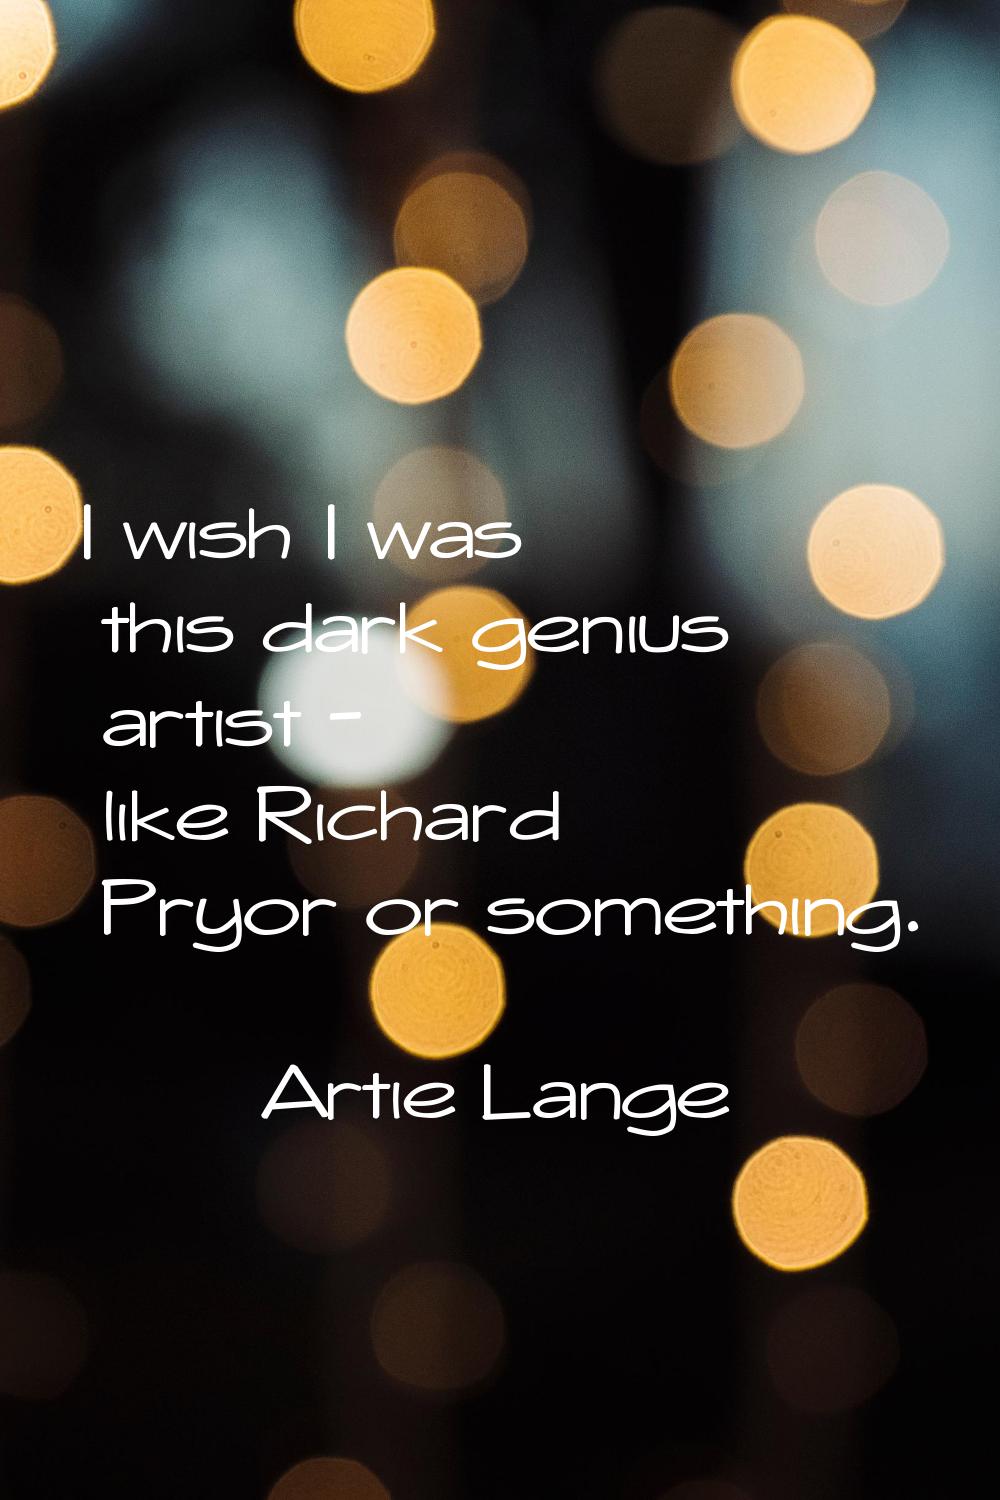 I wish I was this dark genius artist - like Richard Pryor or something.